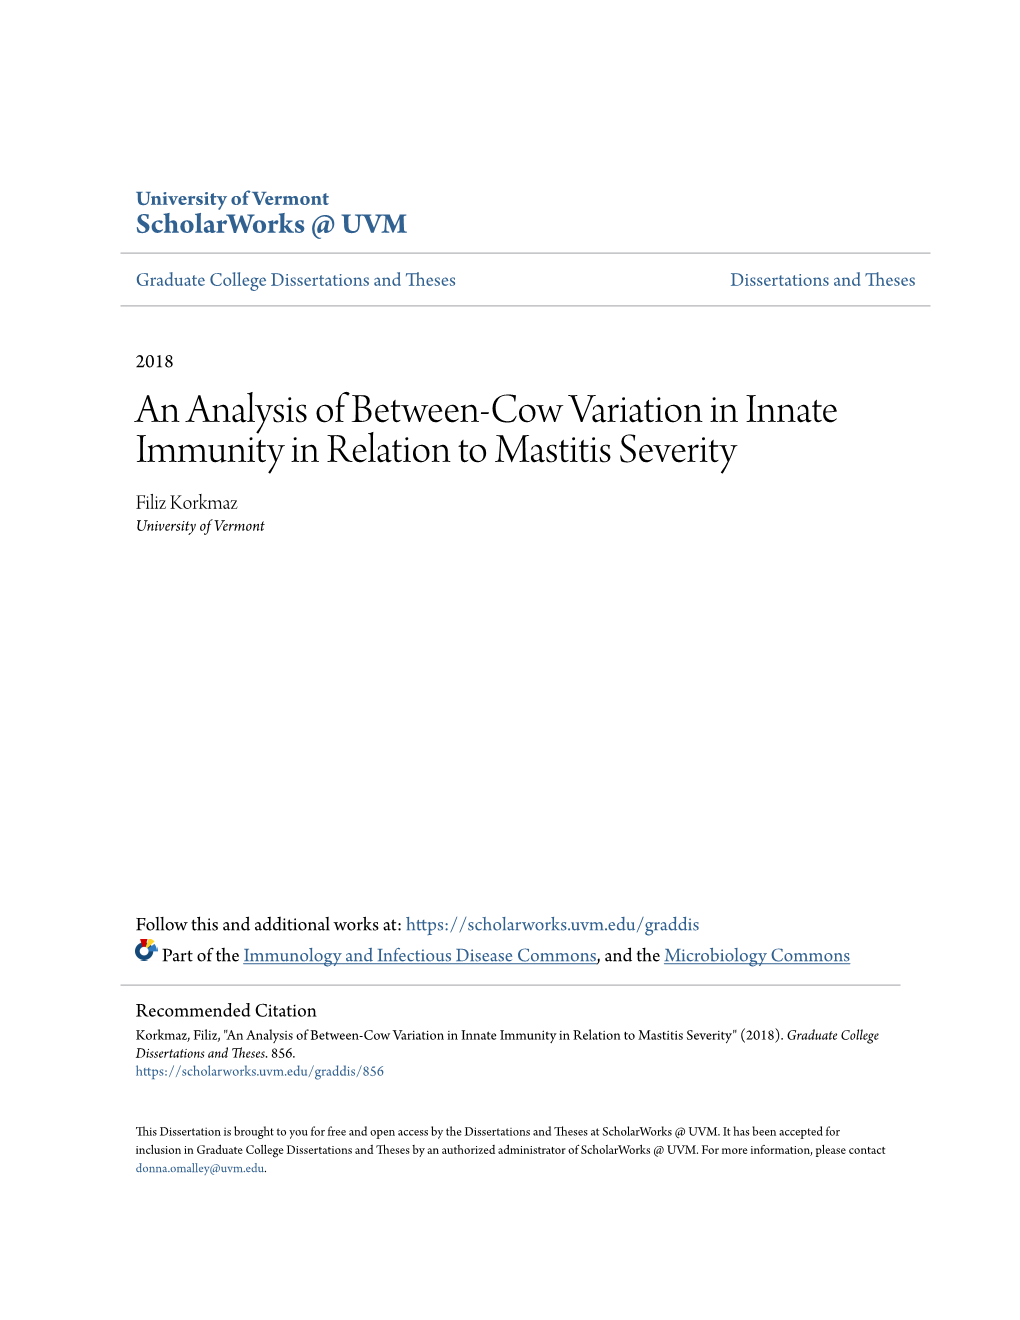 An Analysis of Between-Cow Variation in Innate Immunity in Relation to Mastitis Severity Filiz Korkmaz University of Vermont